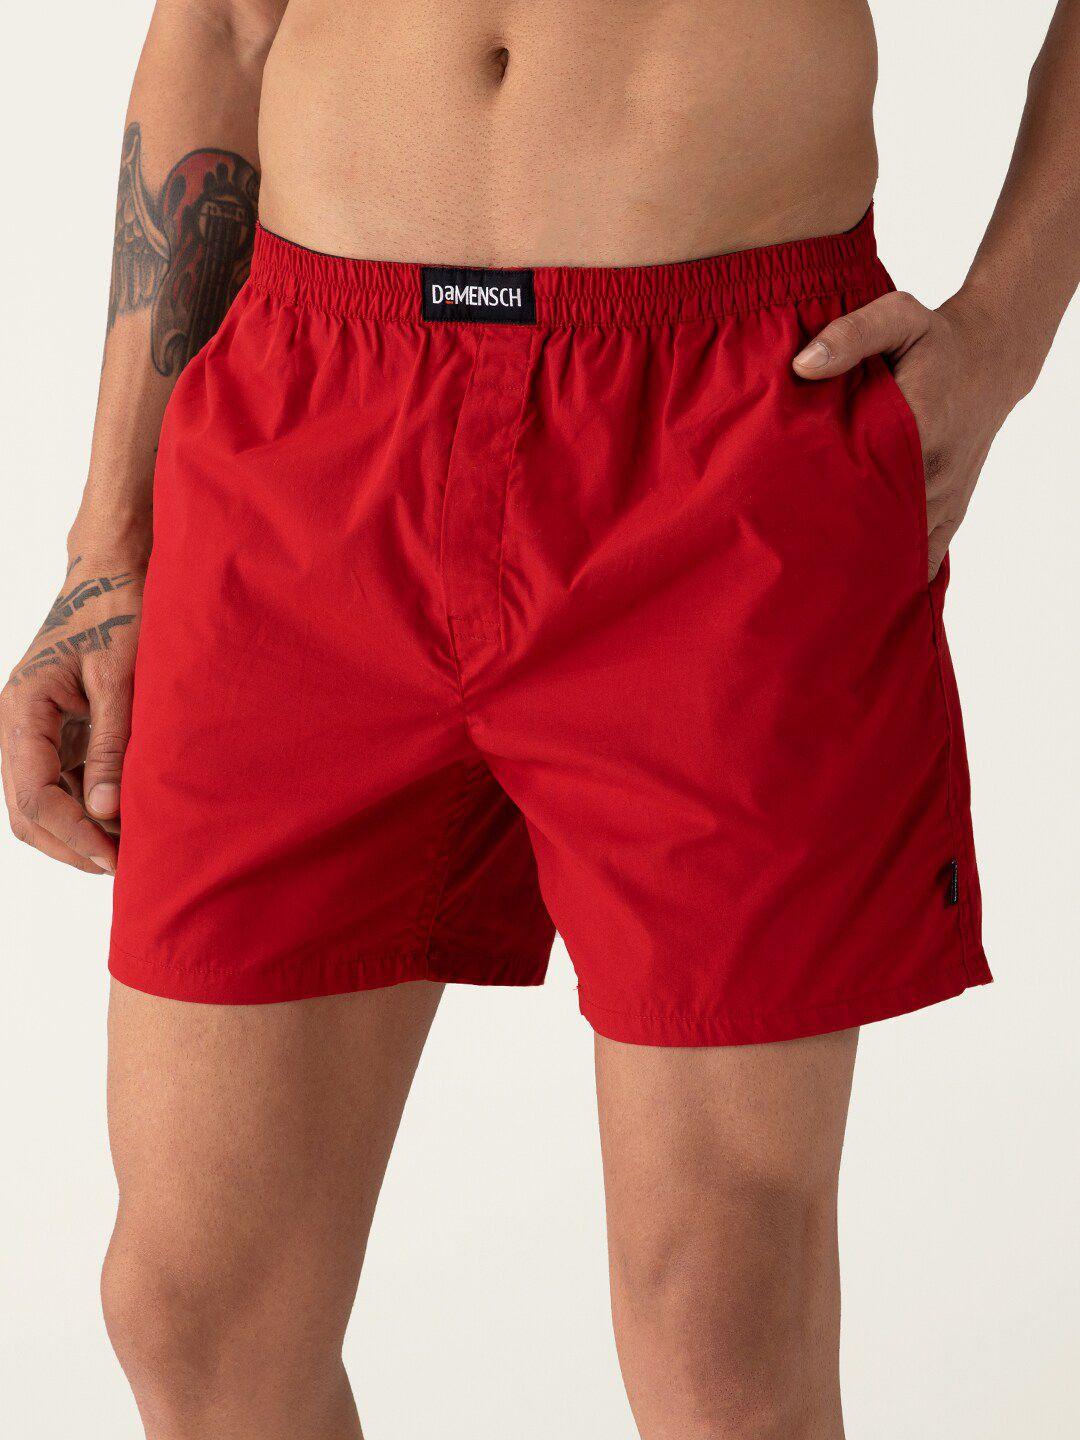 damensch-breeeze-men-red-solid-ultra-light-boxers-pure-cotton-boxers-dam-sld-lbx-low